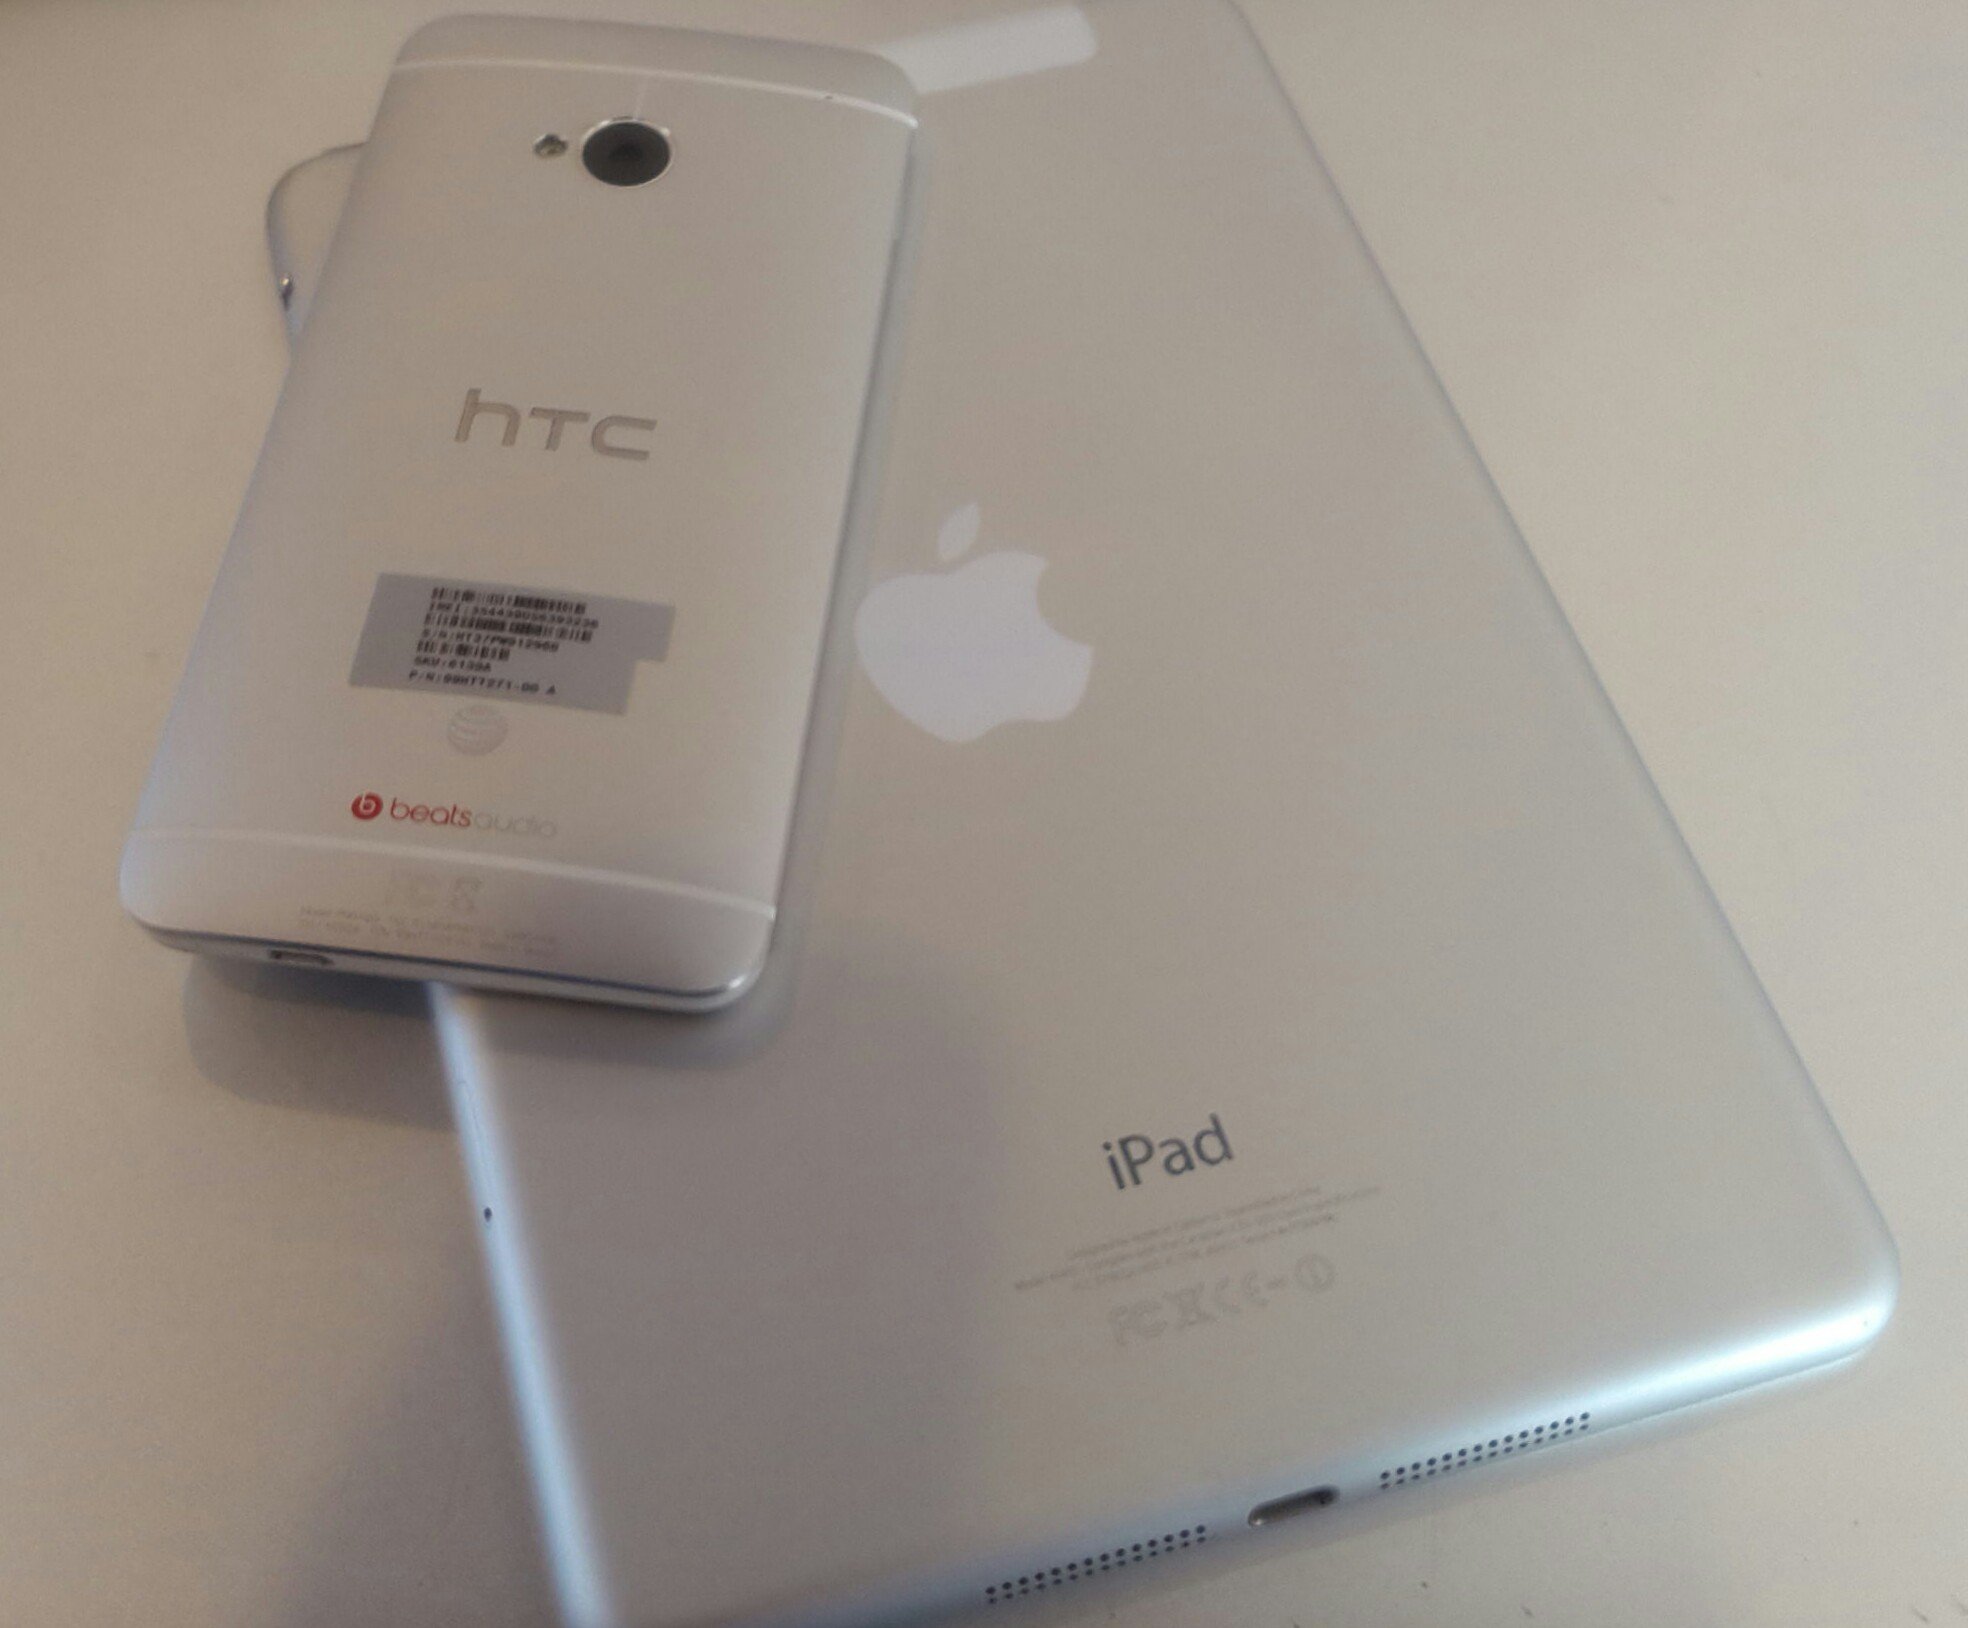 android phone and iPad mini